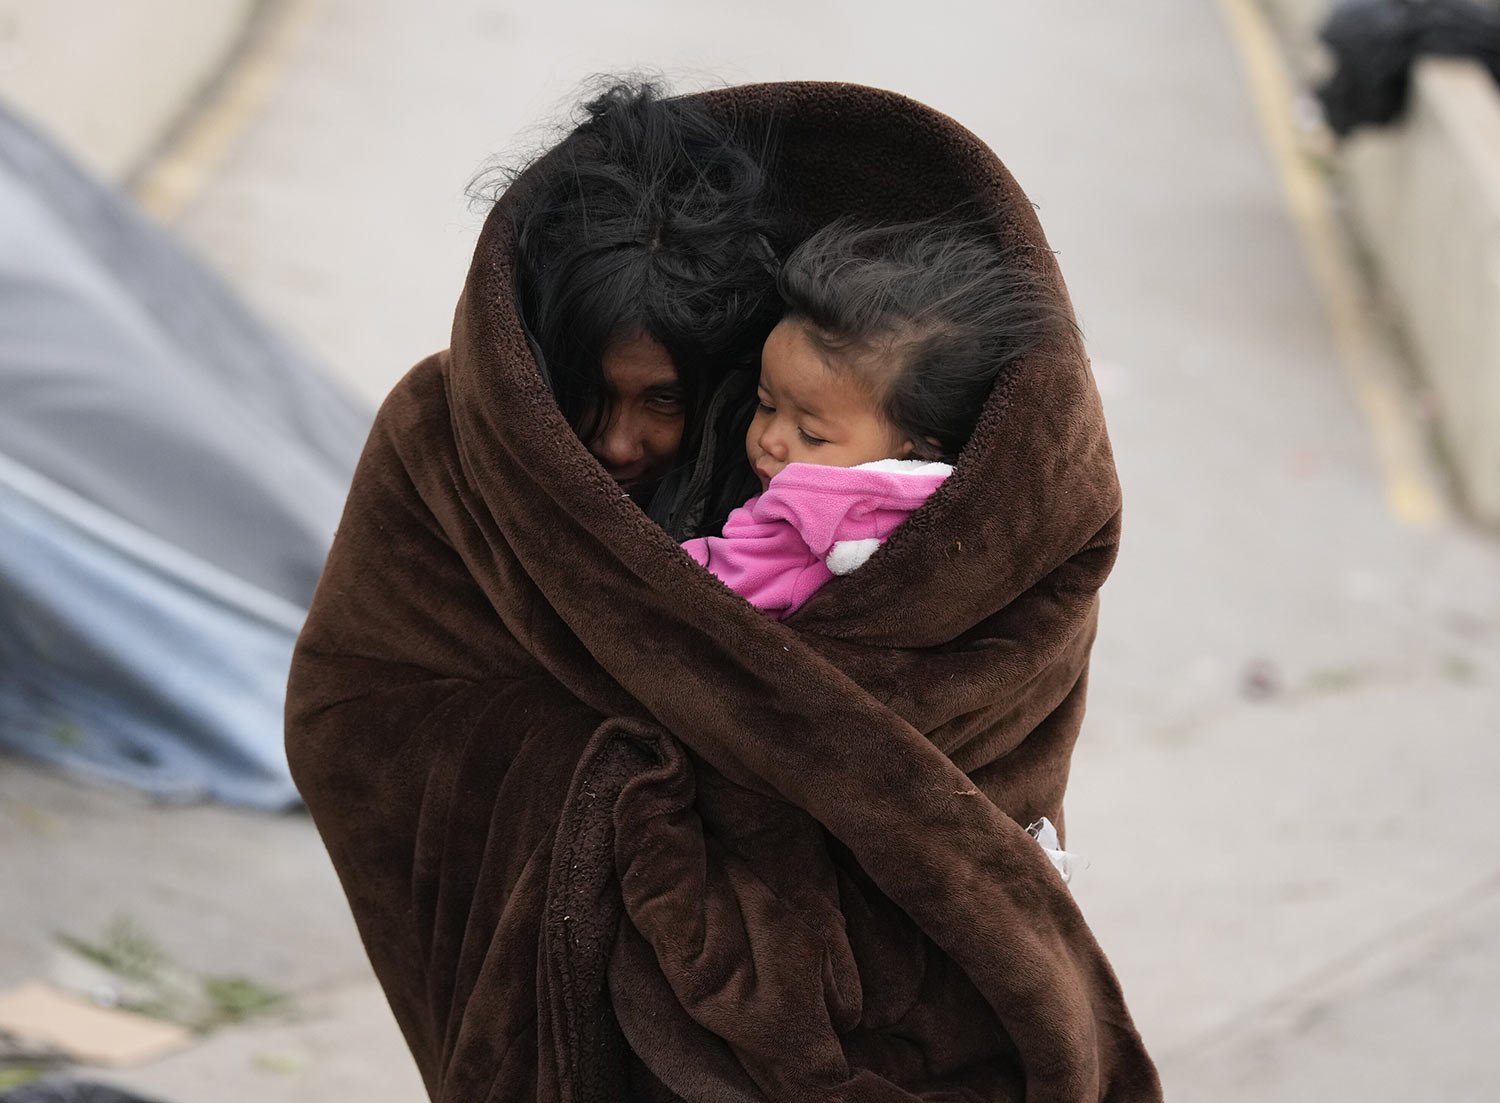  Venezuelan migrants prepare for relocation to a refugee shelter in Matamoros, Mexico, Friday, Dec. 23, 2022. (AP Photo/Fernando Llano) 